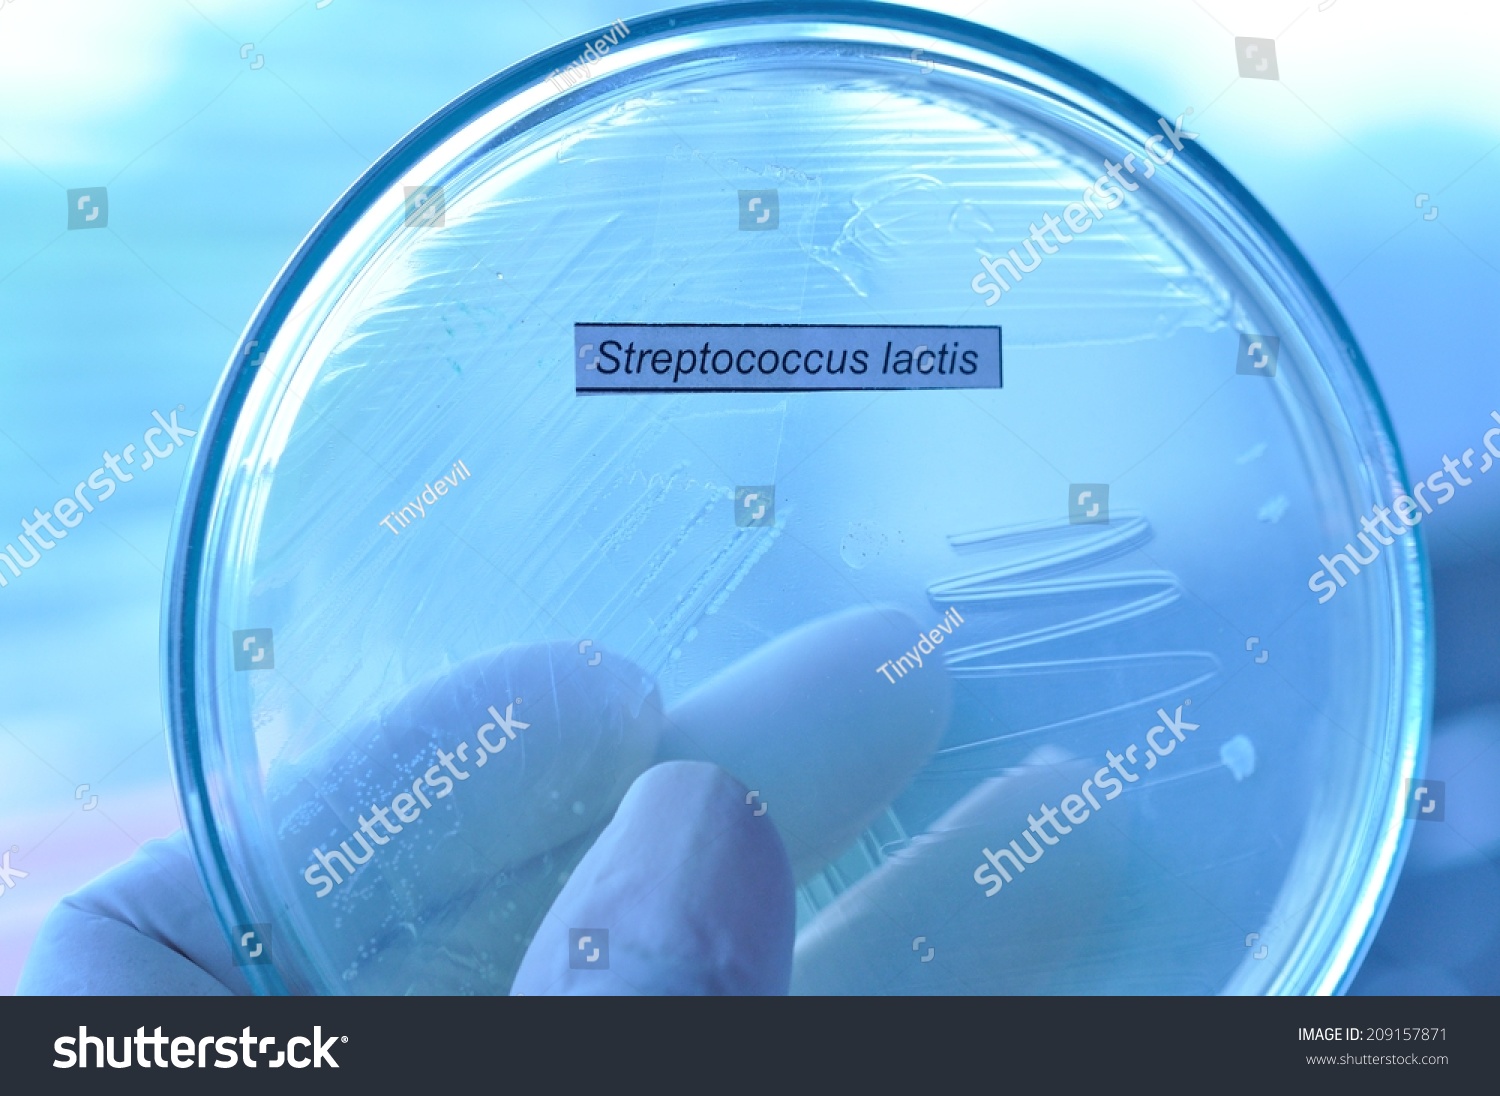 Streptococcus lactis